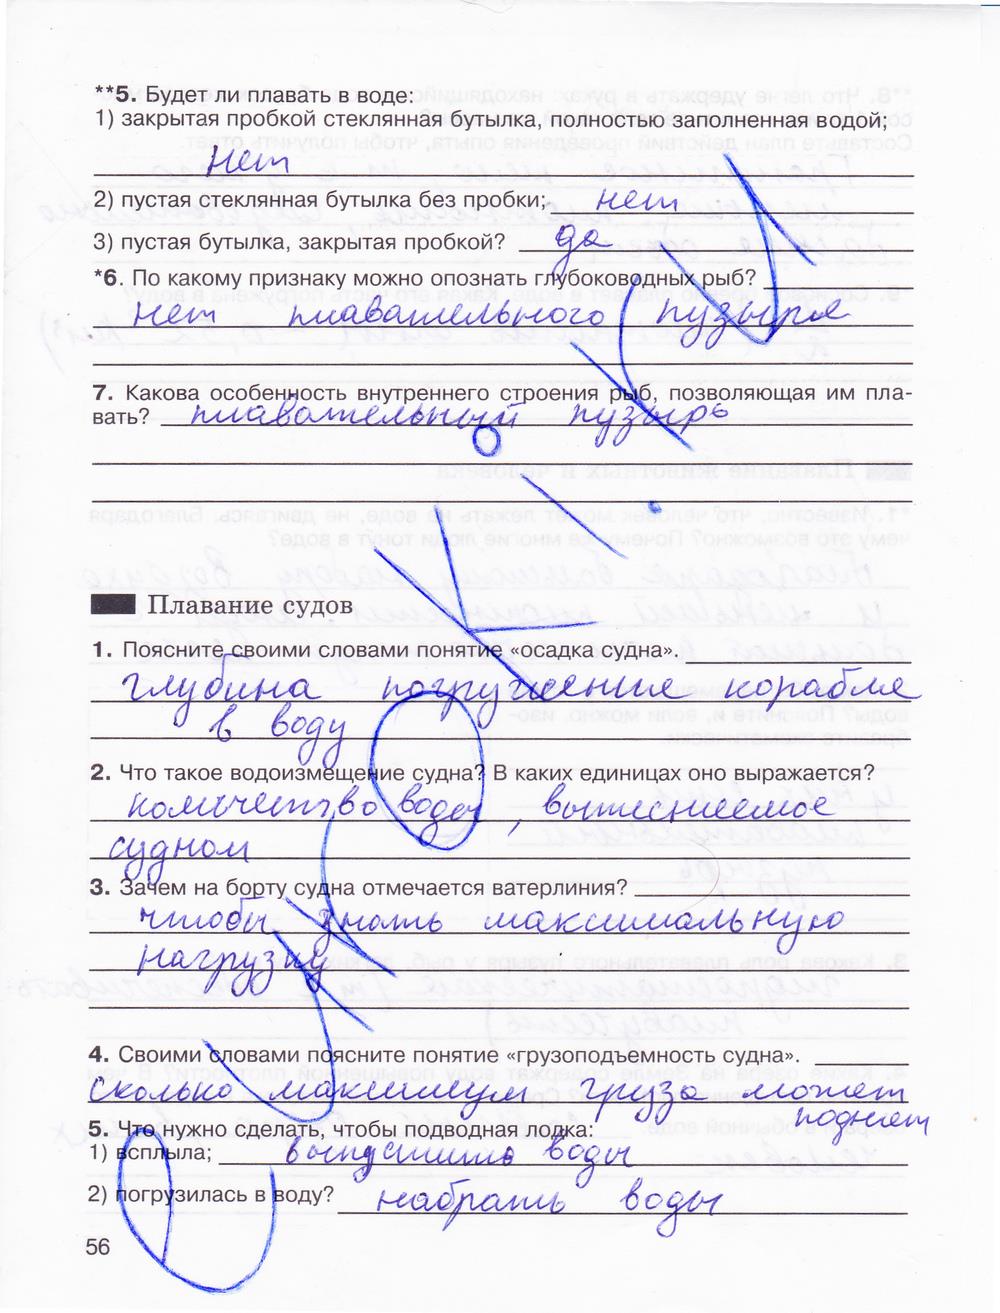 гдз 7 класс рабочая тетрадь страница 56 физика Мартынова, Бовин, Коротаев